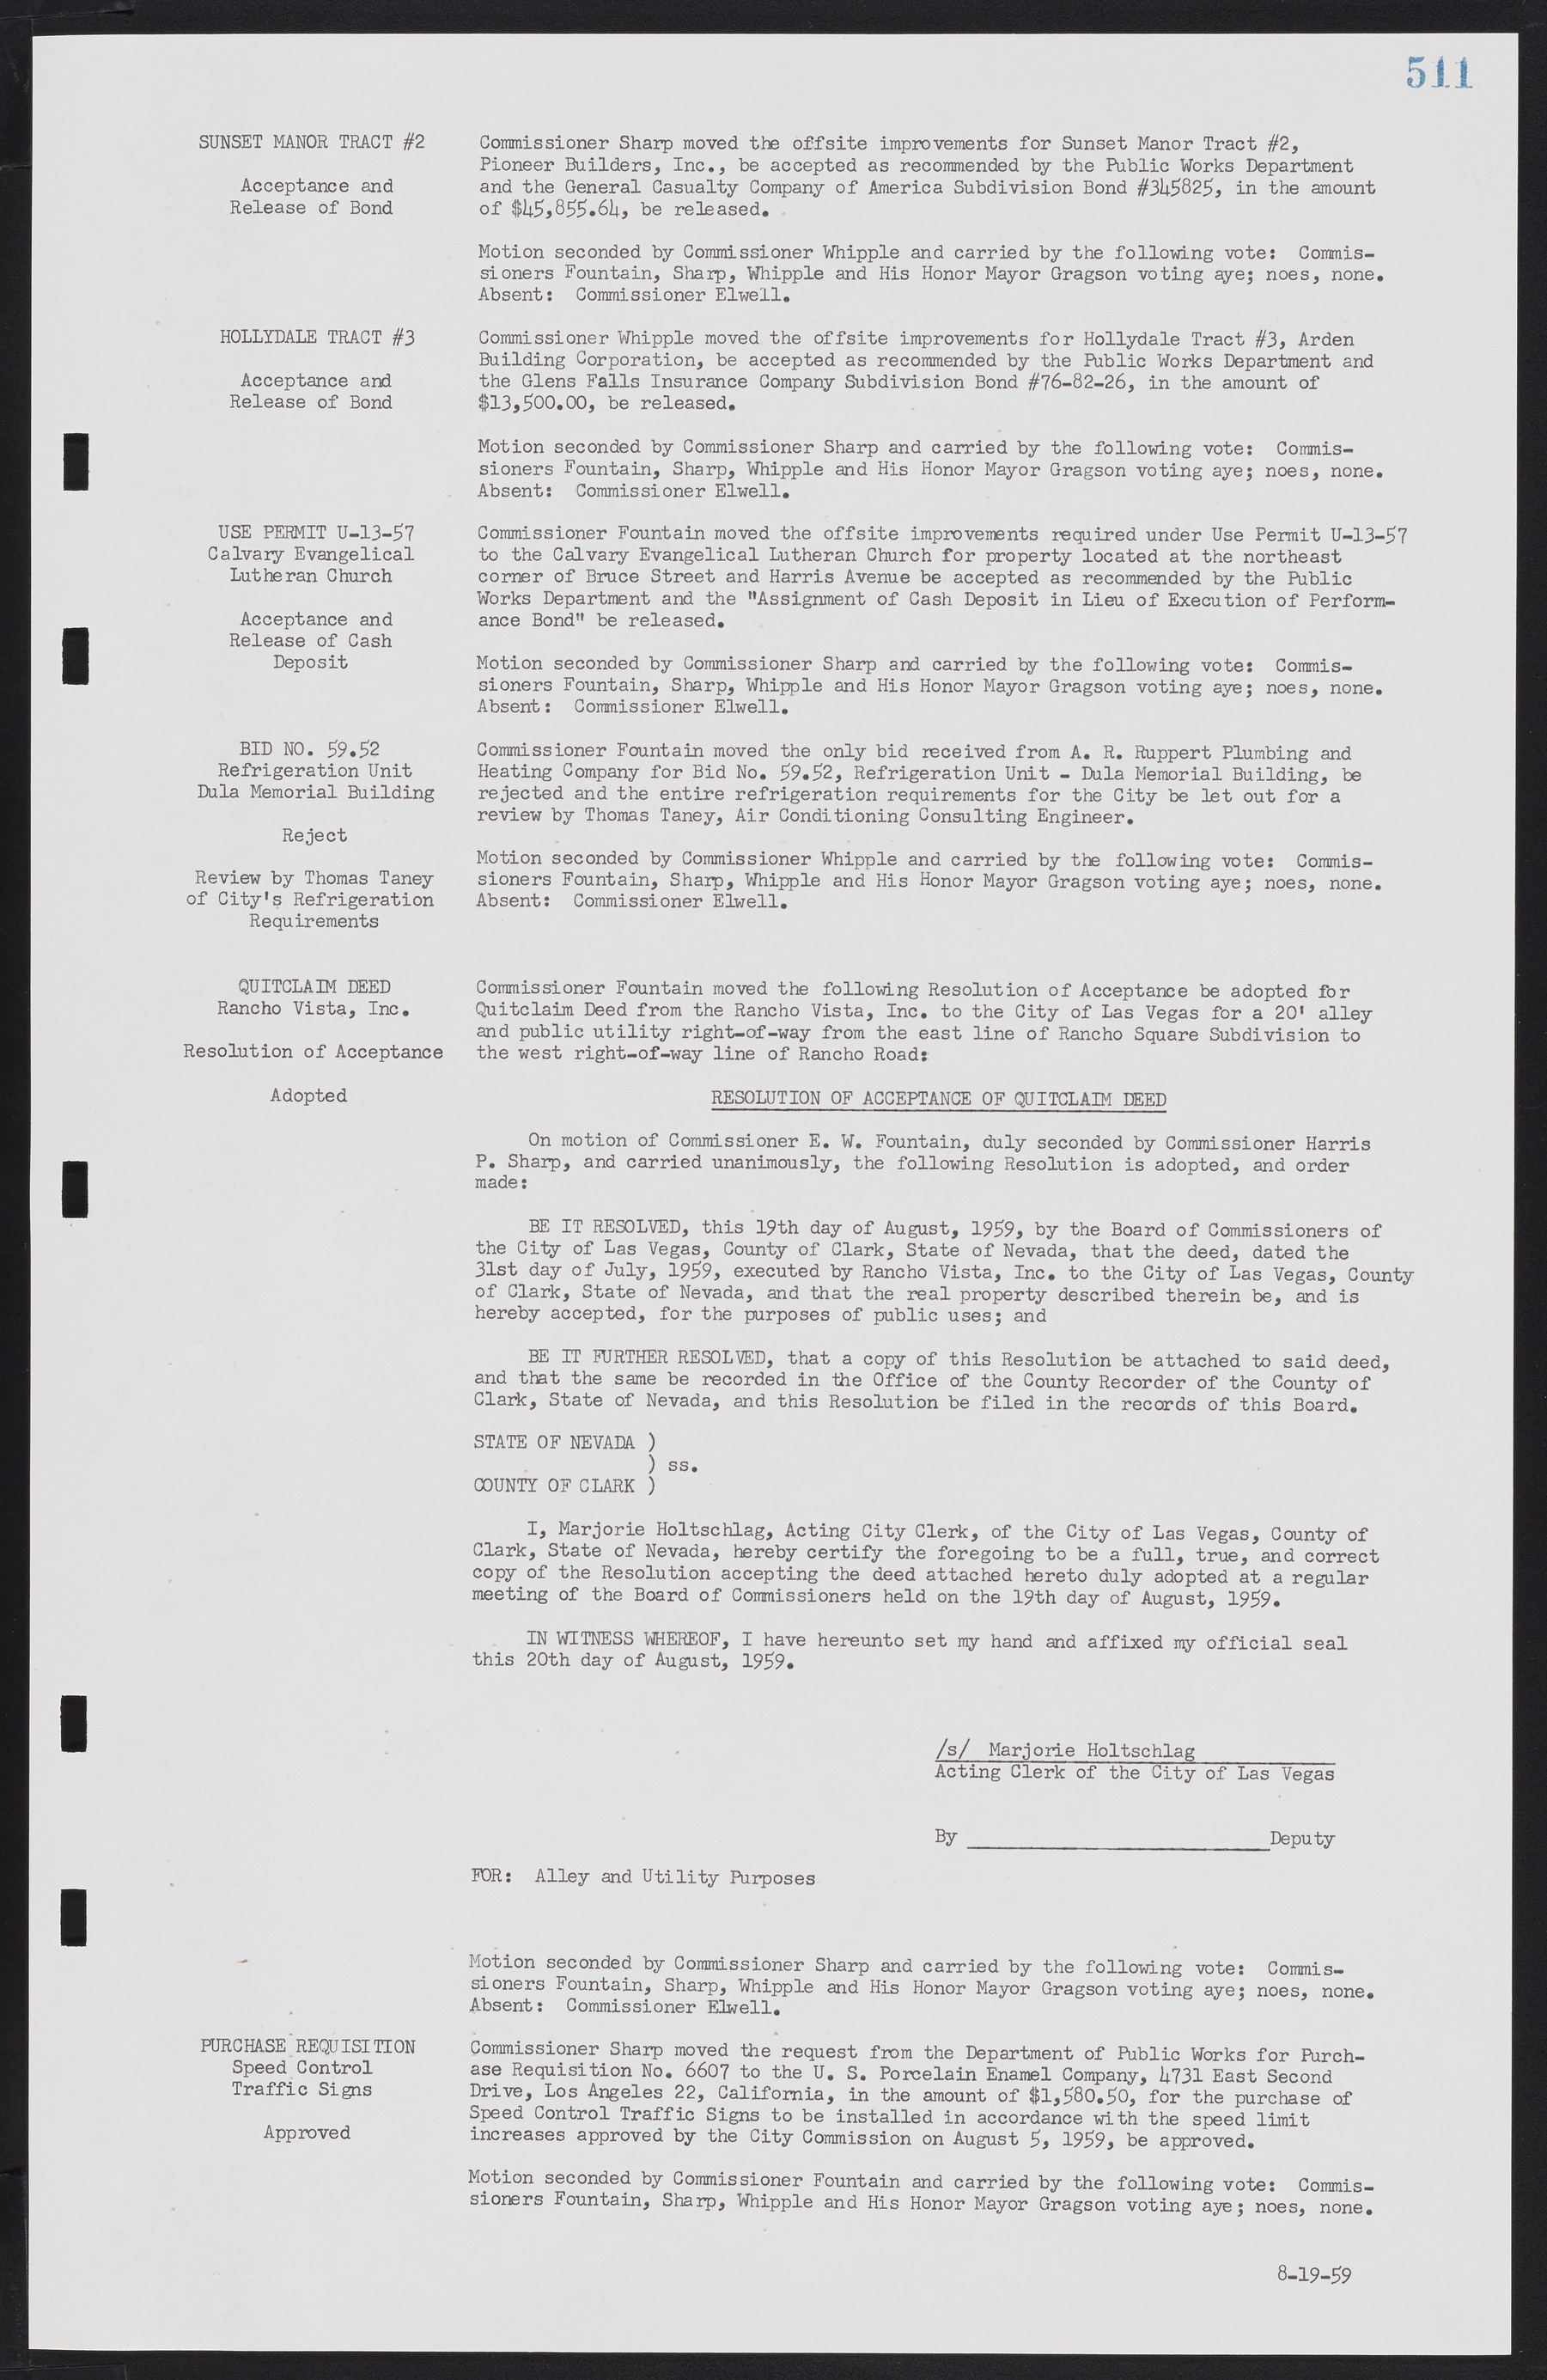 Las Vegas City Commission Minutes, November 20, 1957 to December 2, 1959, lvc000011-547